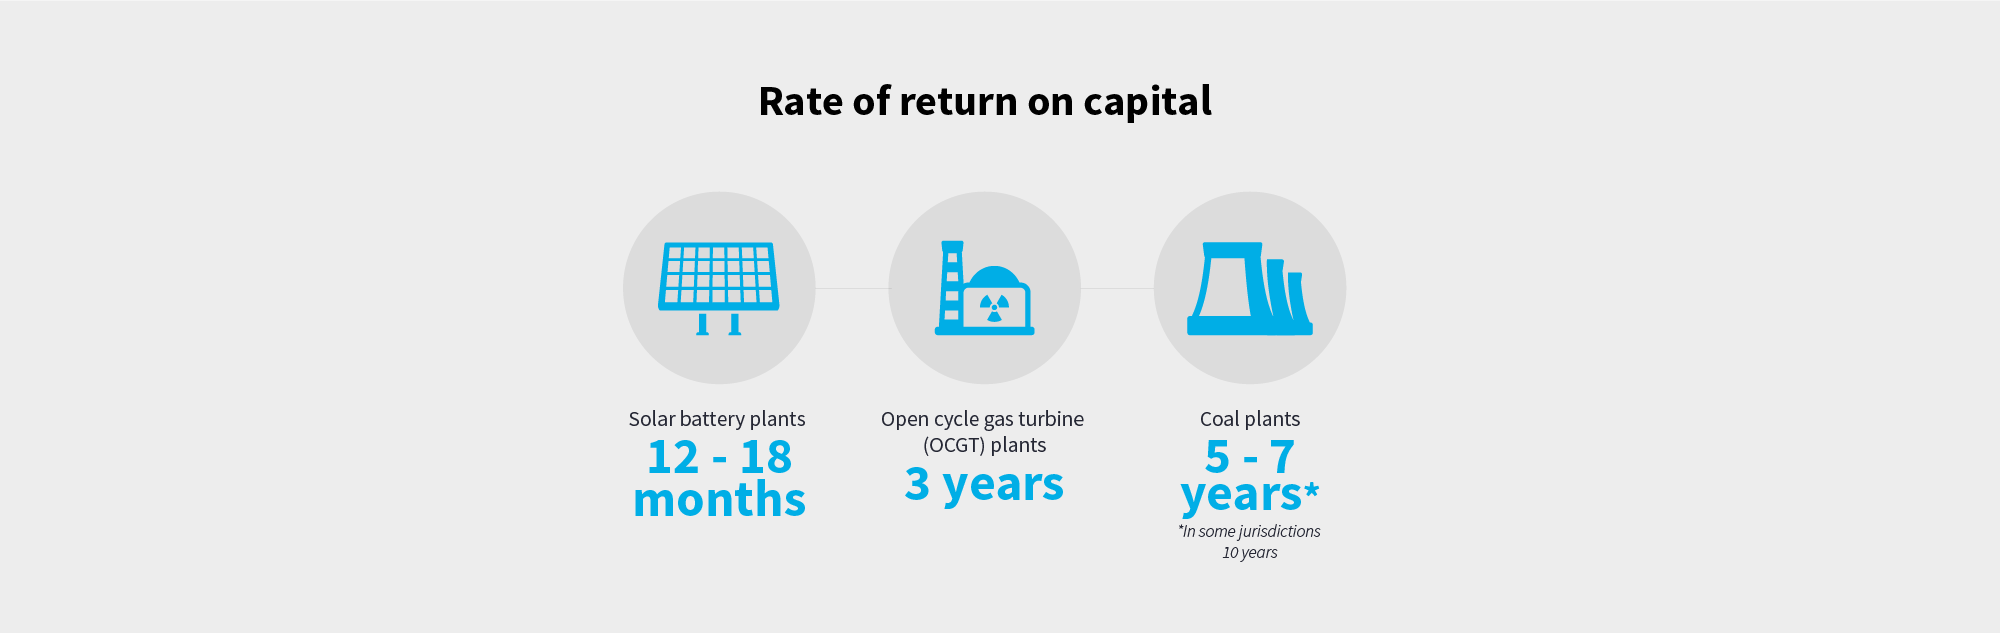 Rate of return on capital